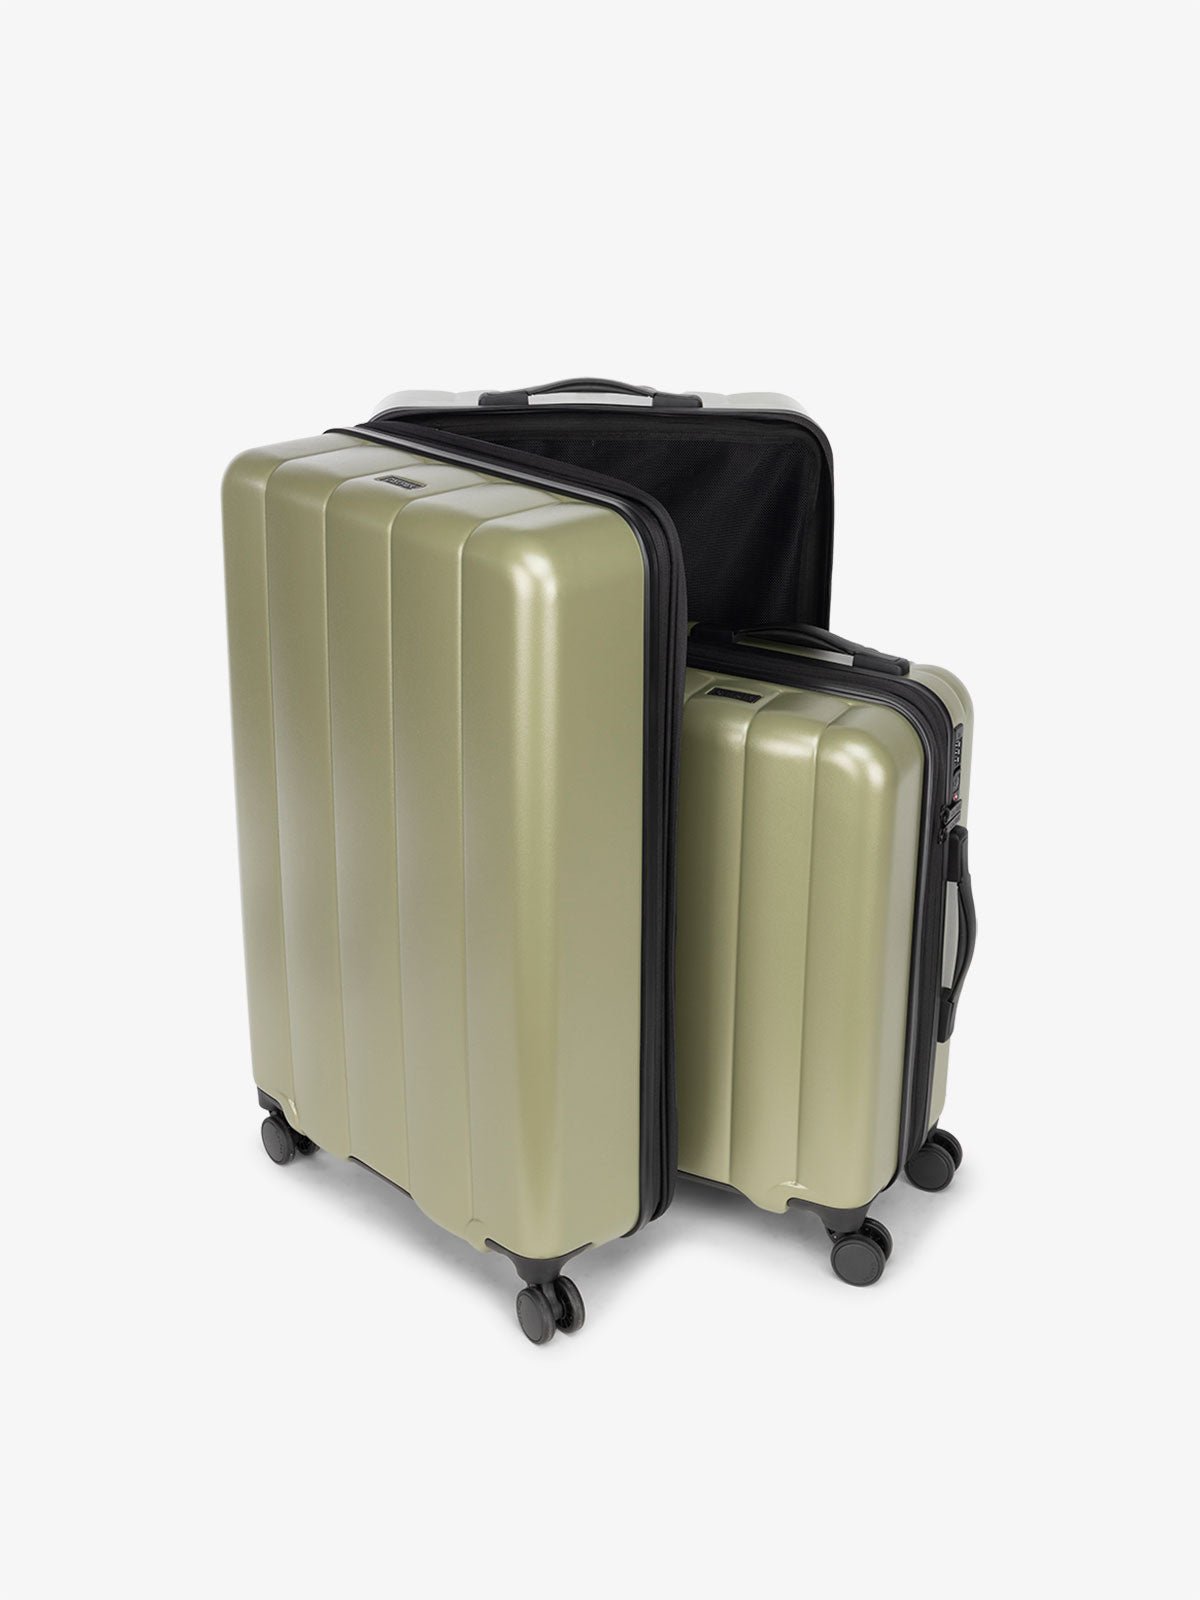 CALPAK Starter Bundle 2 piece hard side luggage set in pistachio